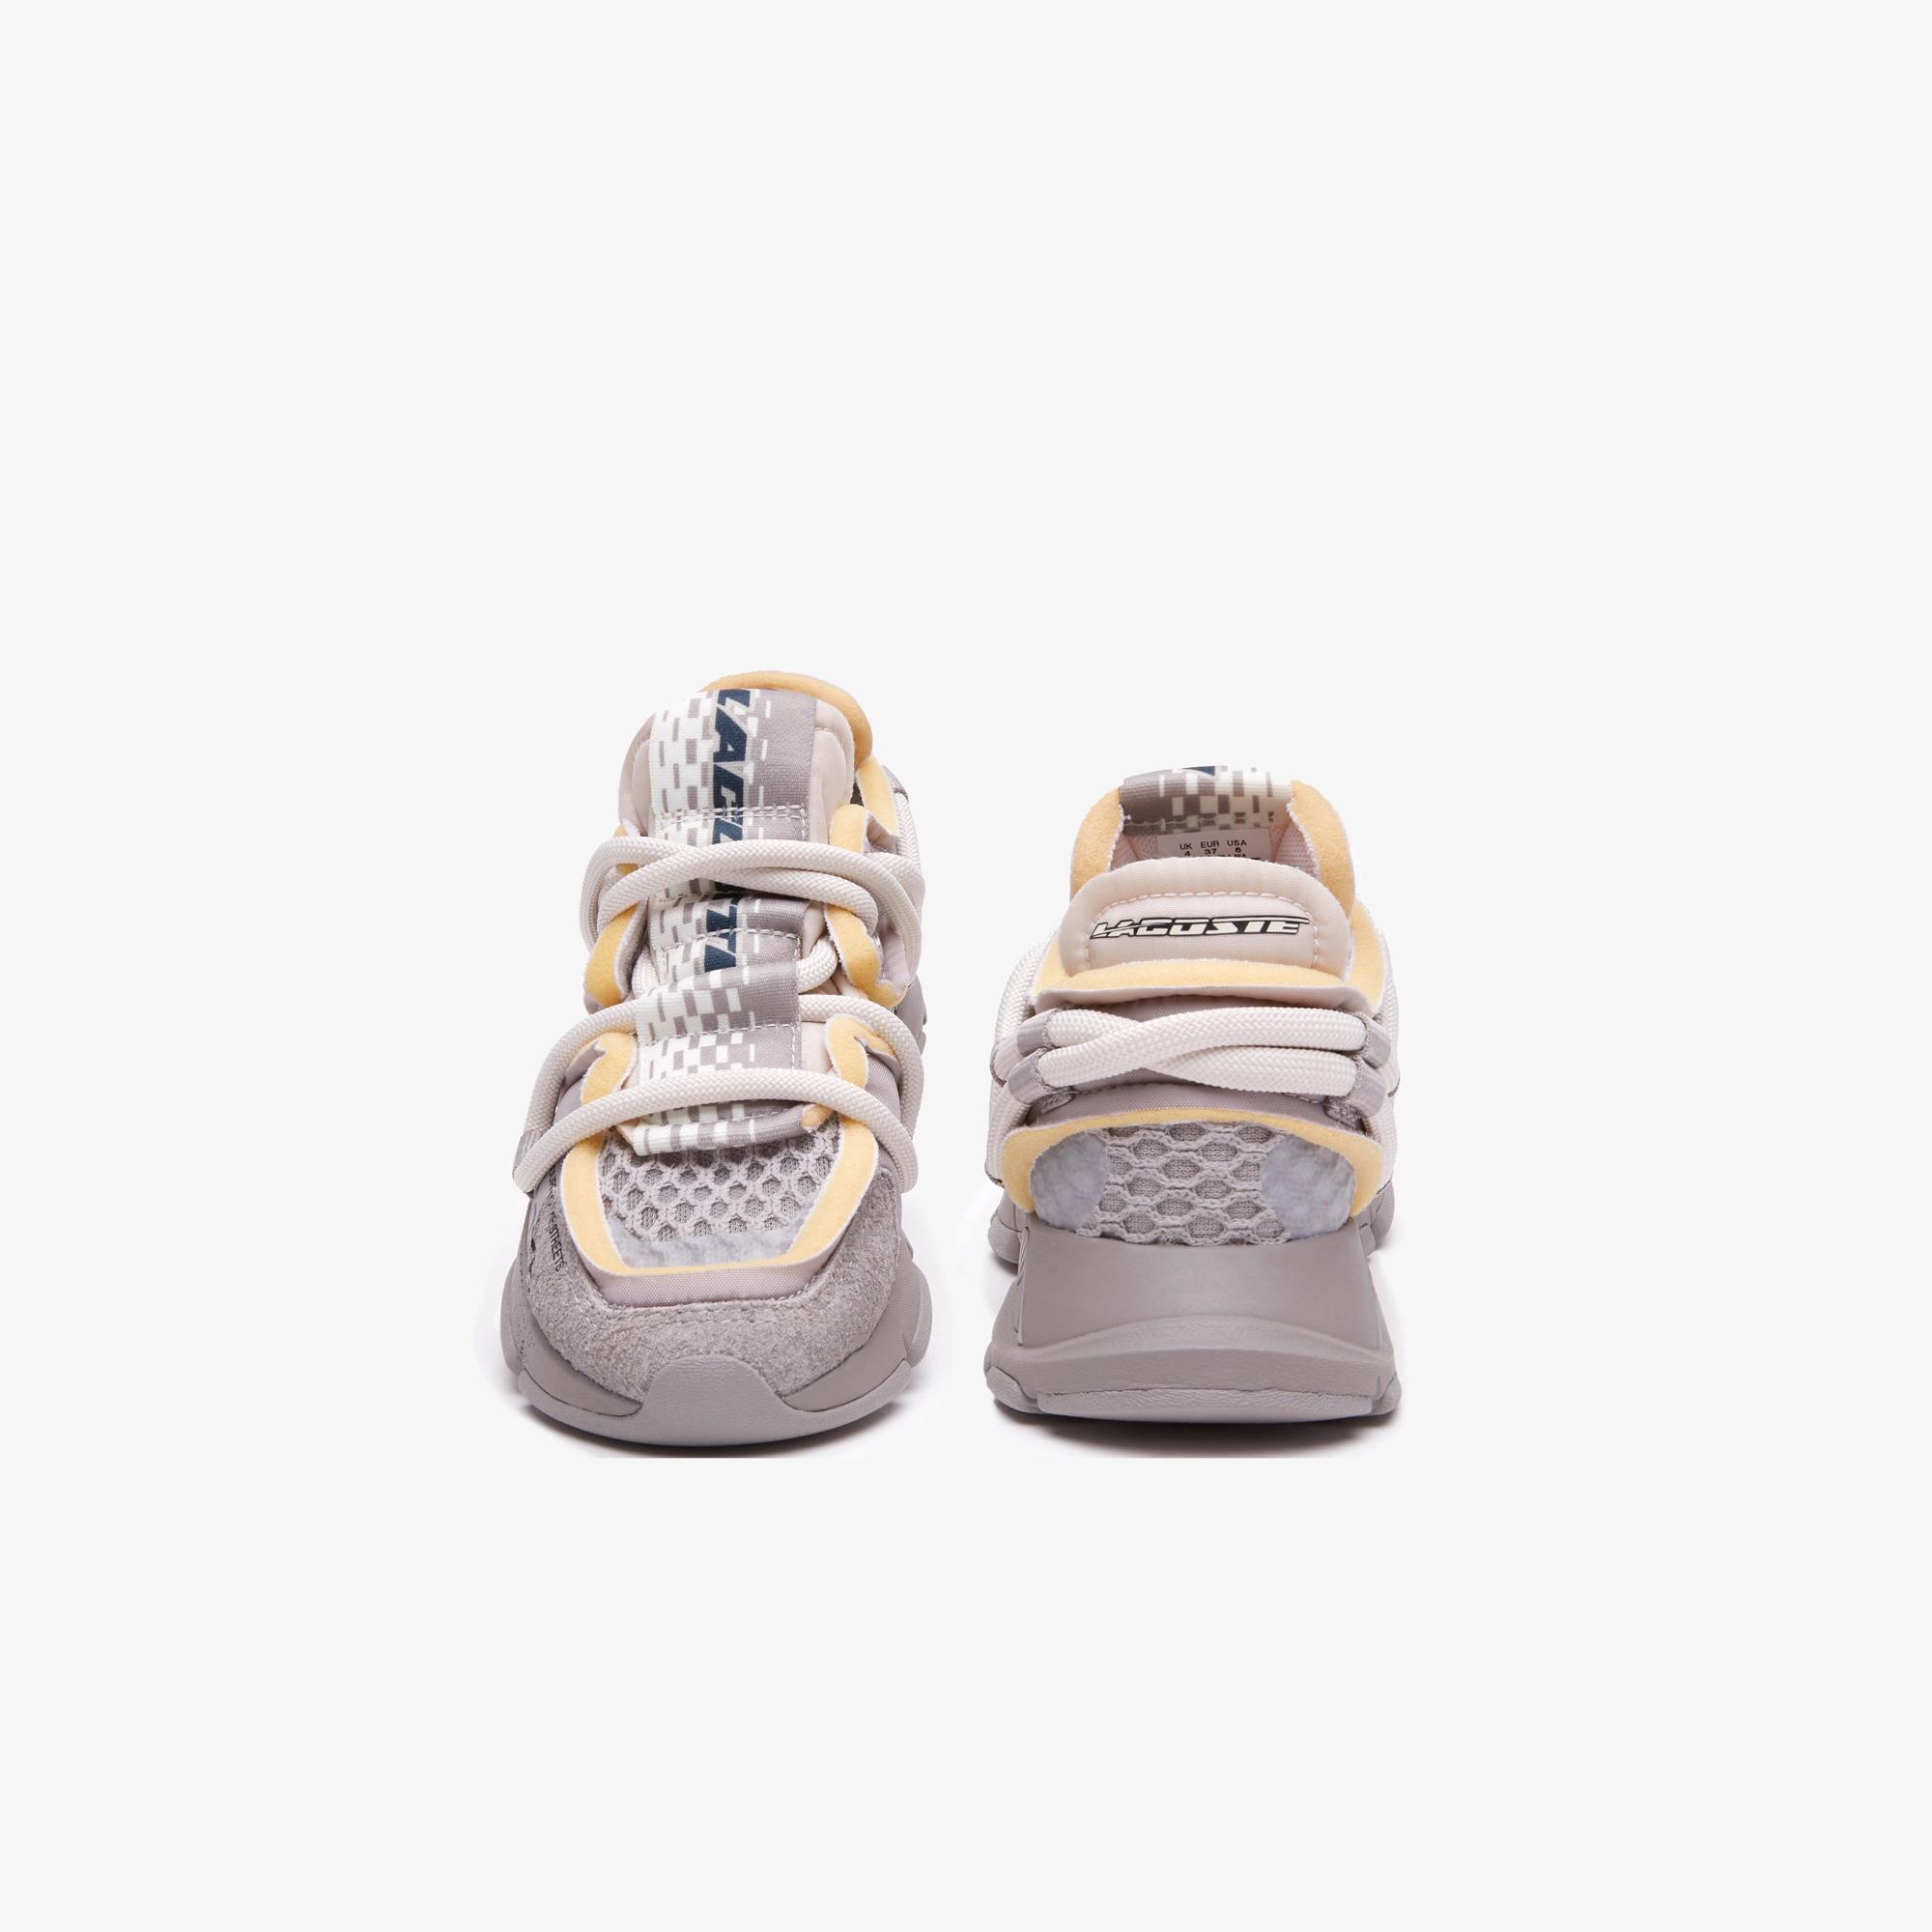 Giày Lacoste L003 Active Runway Sneakers Nam Xám Vàng